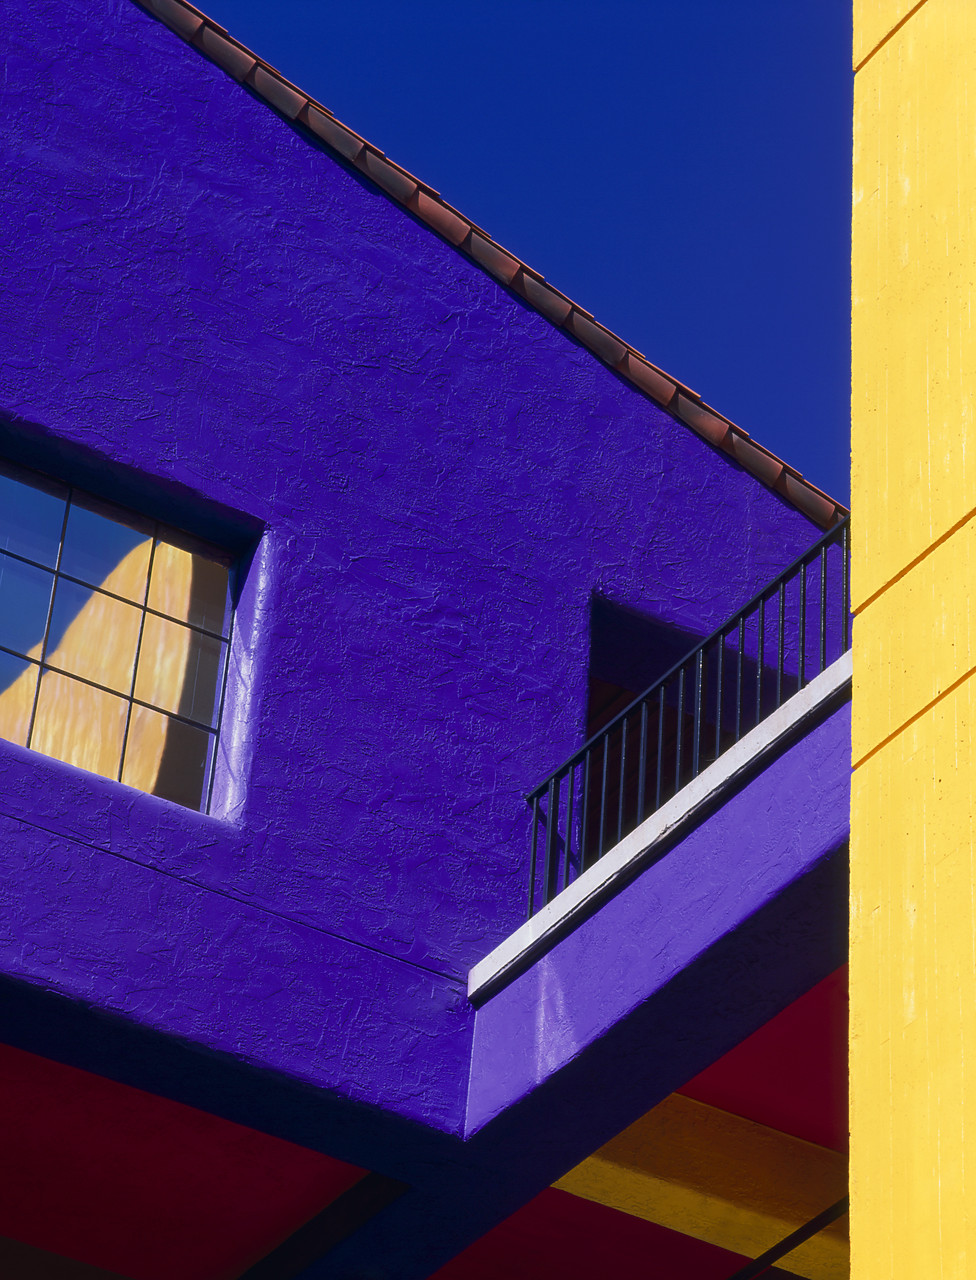 #990684-1 - La Placita Architecture, Tucson, Arizona, USA